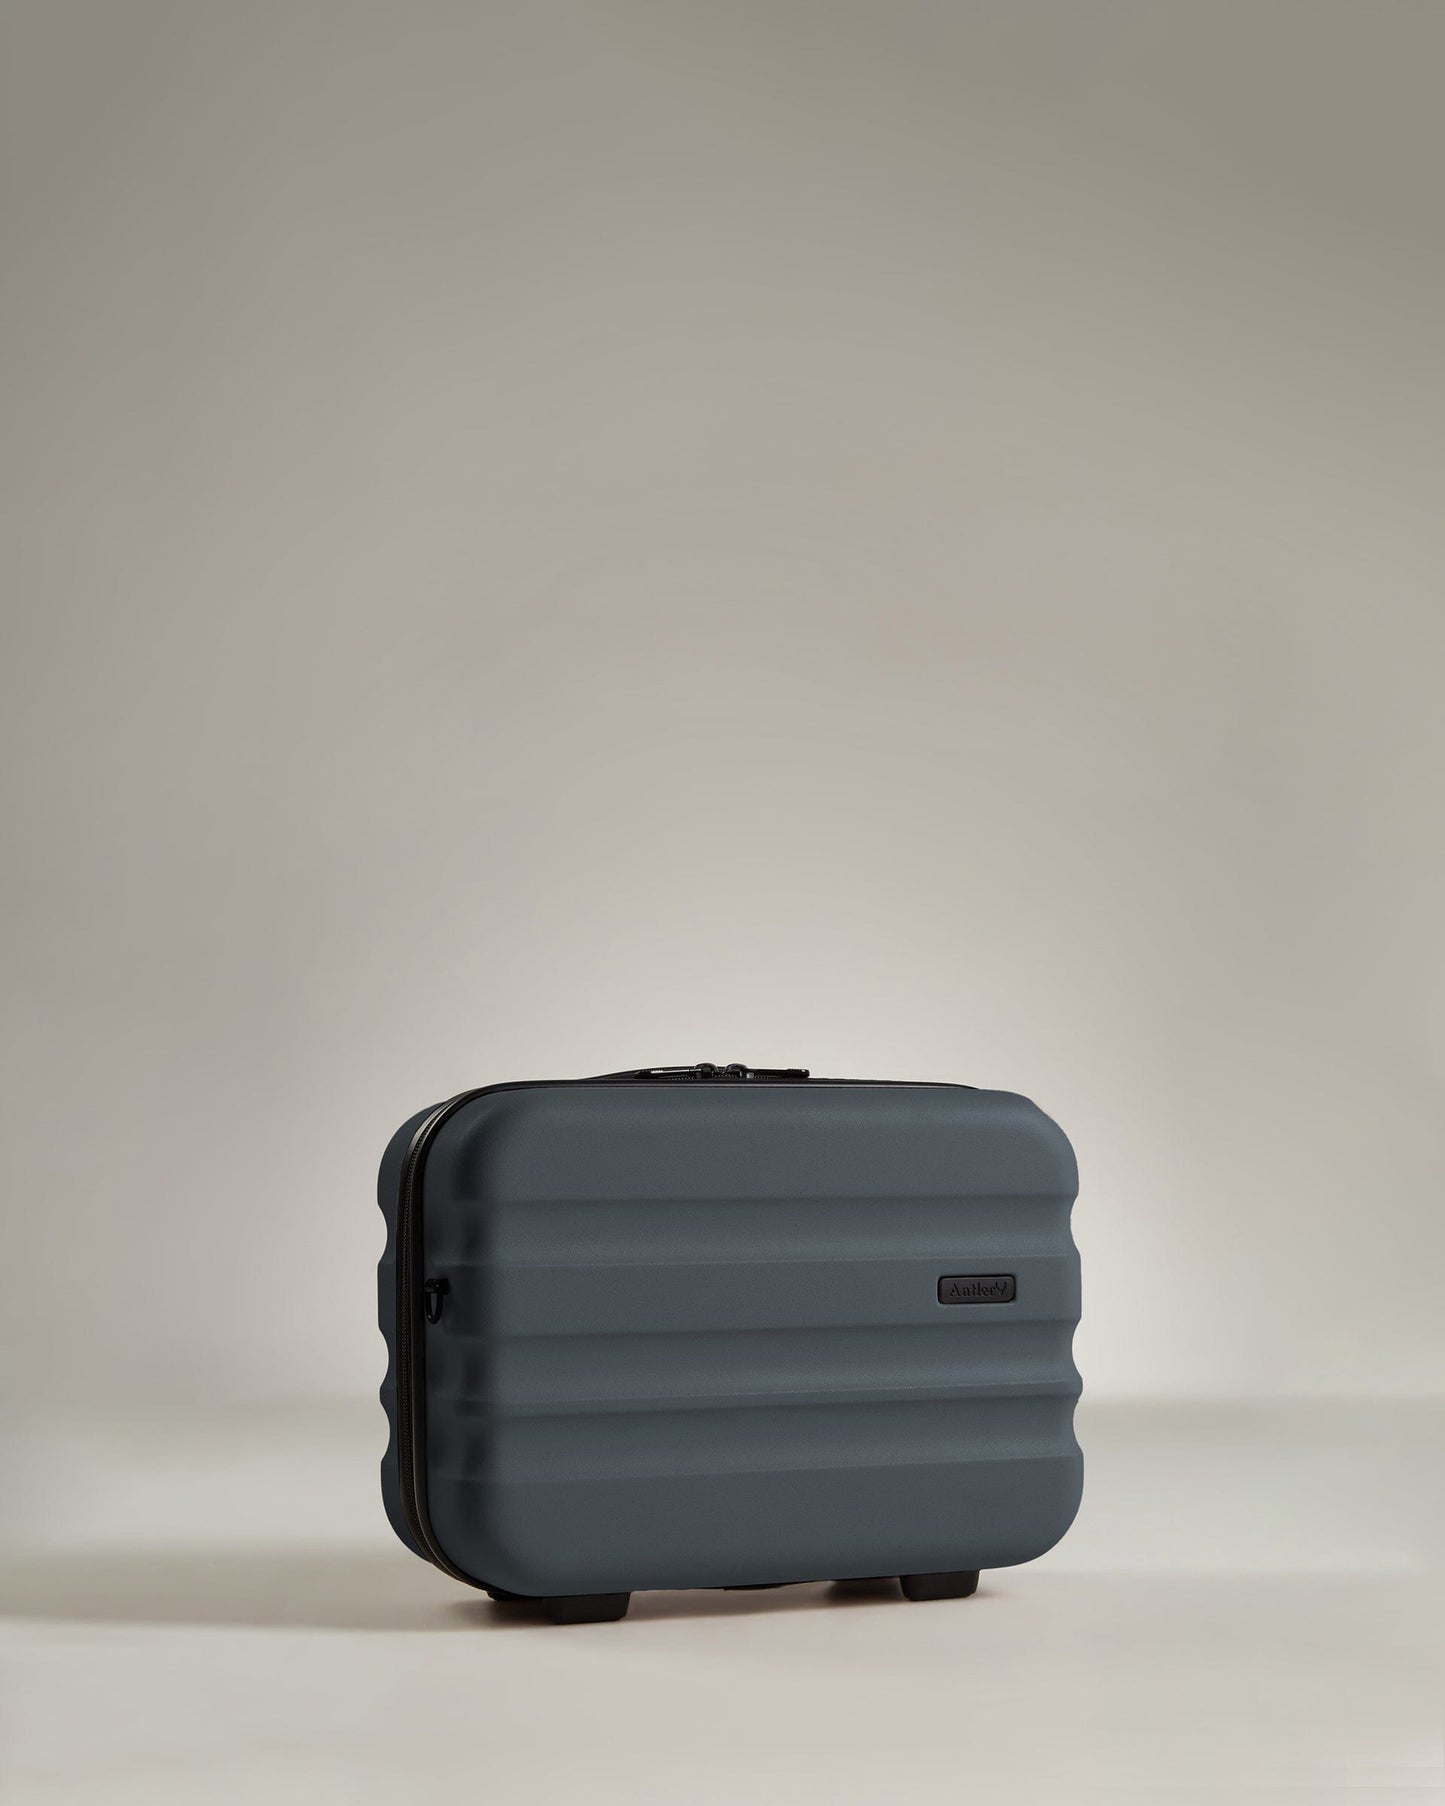 Antler Luggage -  Clifton vanity case in navy - Hard Suitcases Clifton Vanity Case Navy | Travel Accessories & Gifts | Antler 